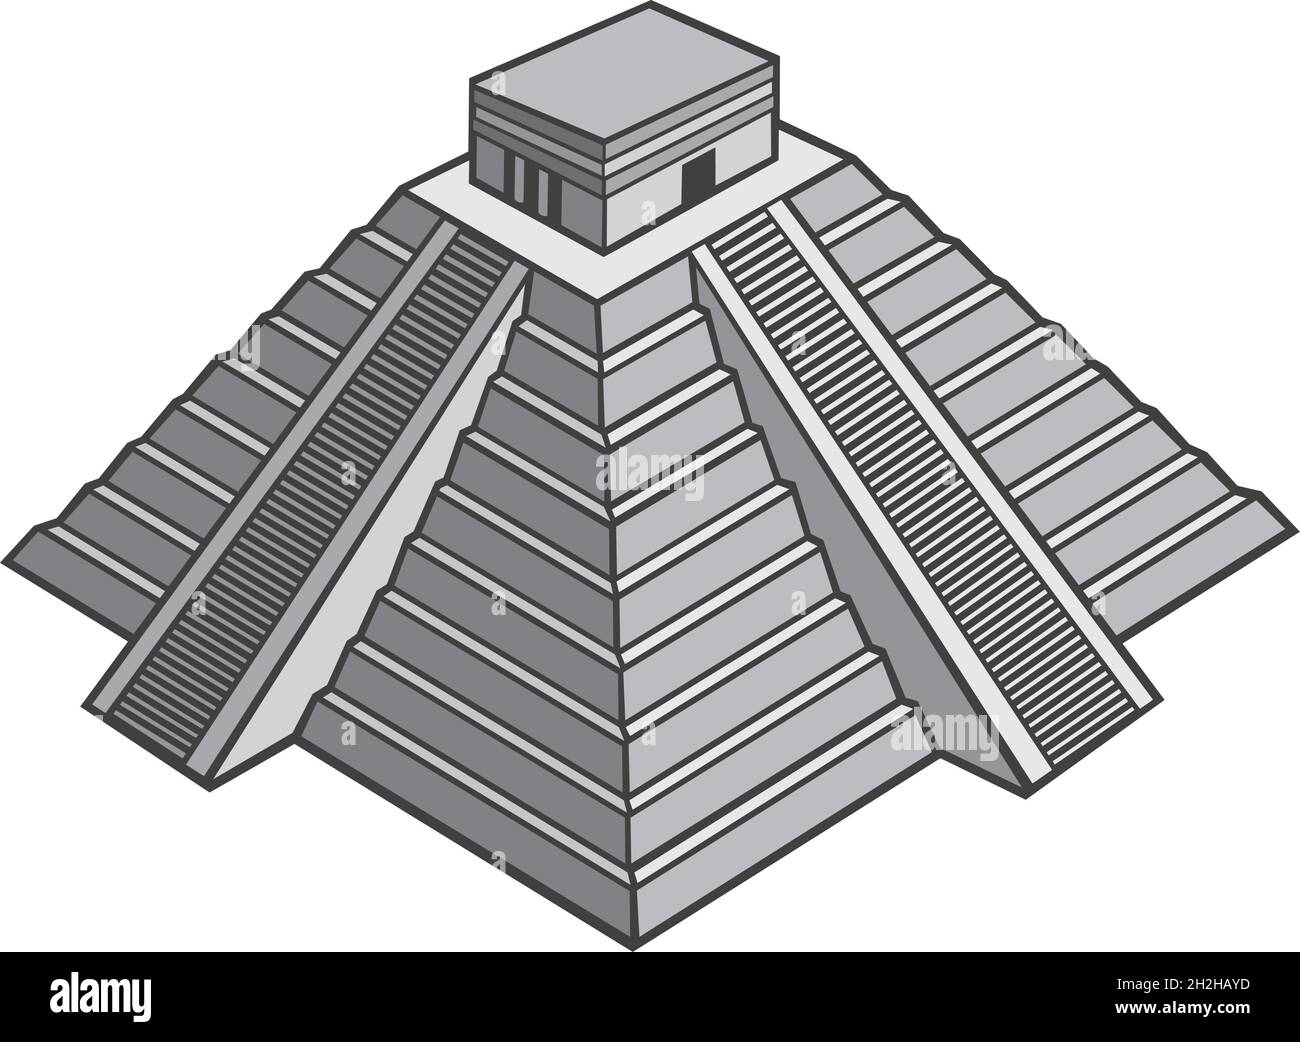 Mayan pyramid vector illustration Stock Vector